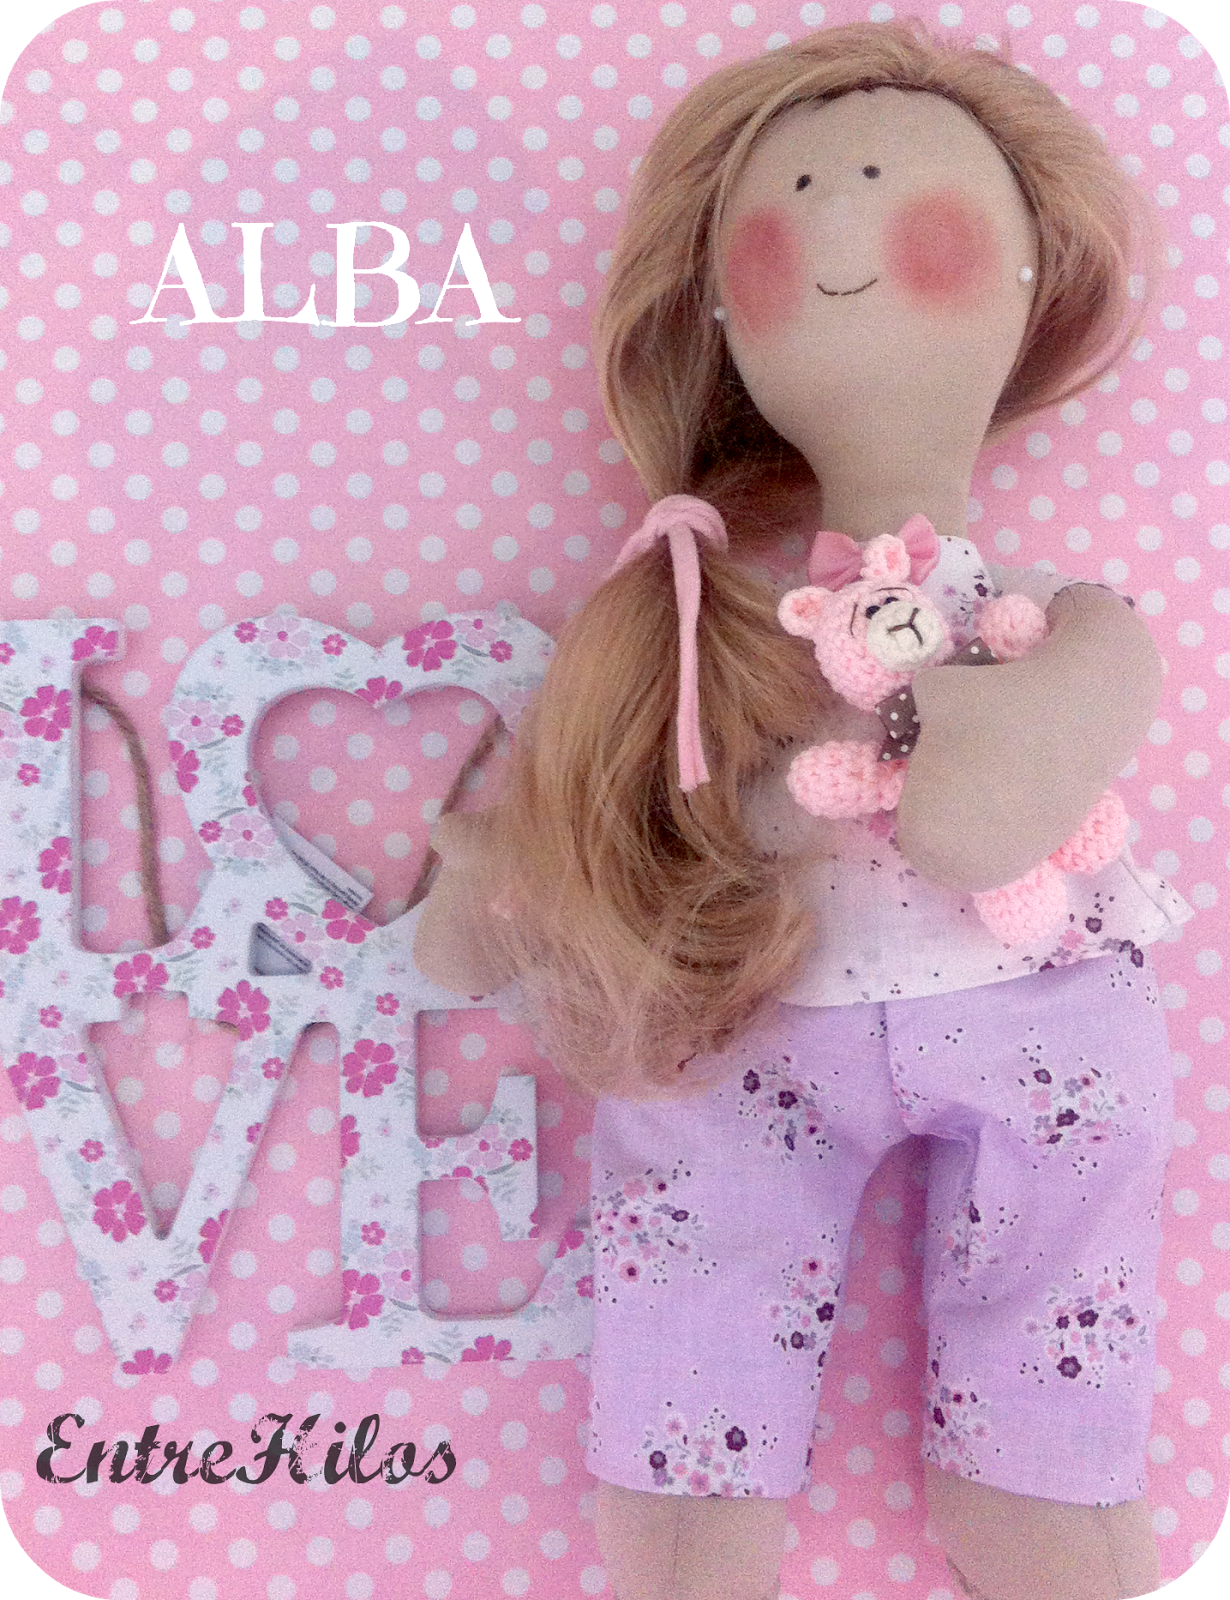 Alba nueva muñeca